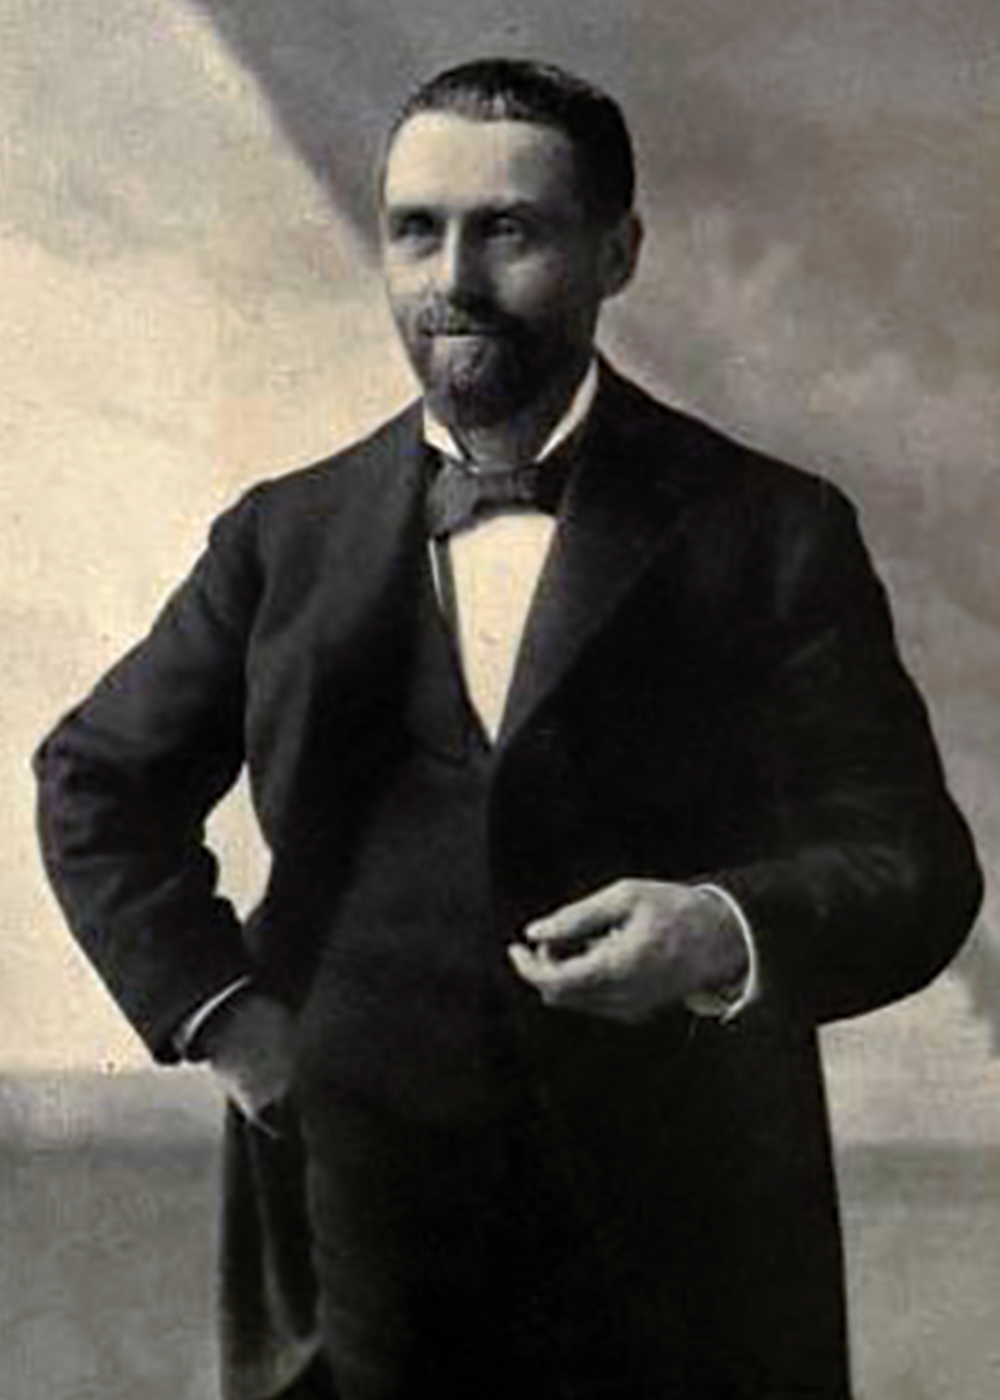 John Altgeld (Photo courtesy of Clarence Darrow Digital Collection at University of Minnesota.) 